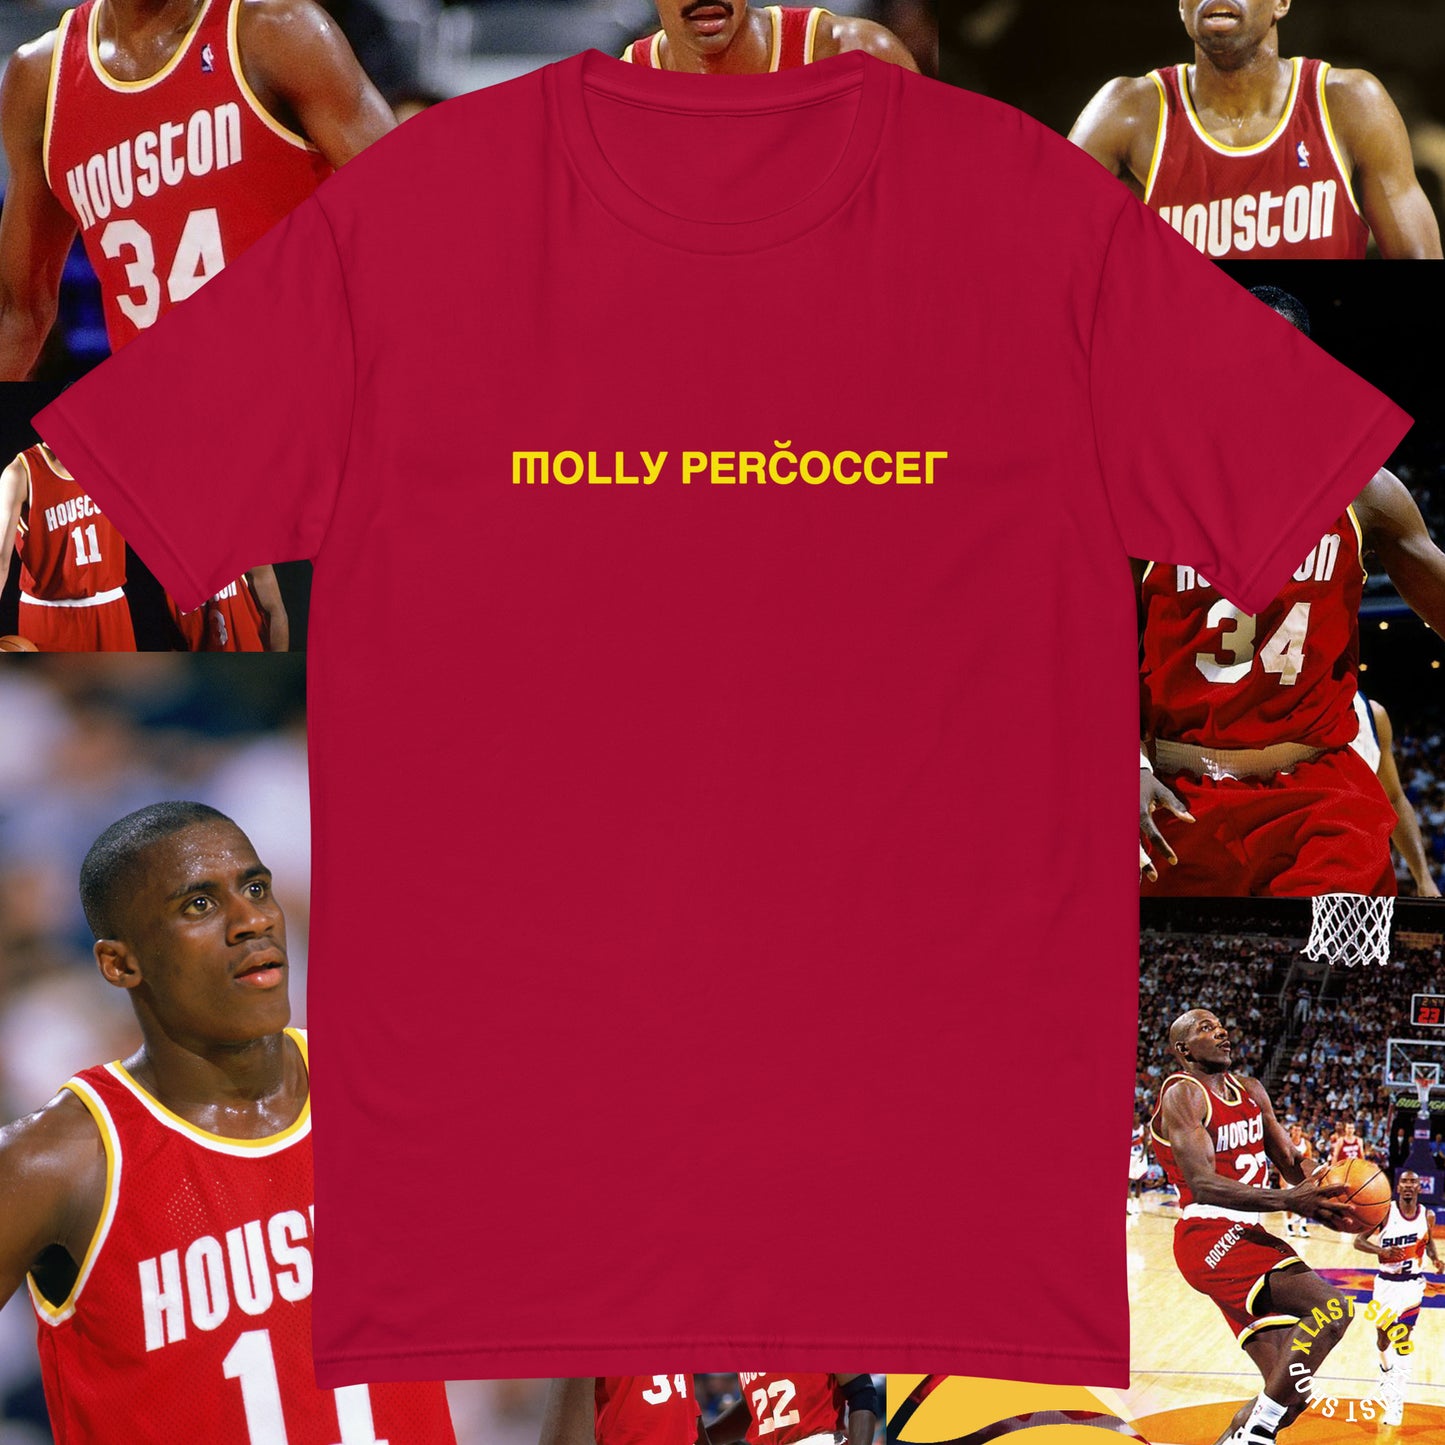 LAST "Molly Percoccet" Houston T-shirt